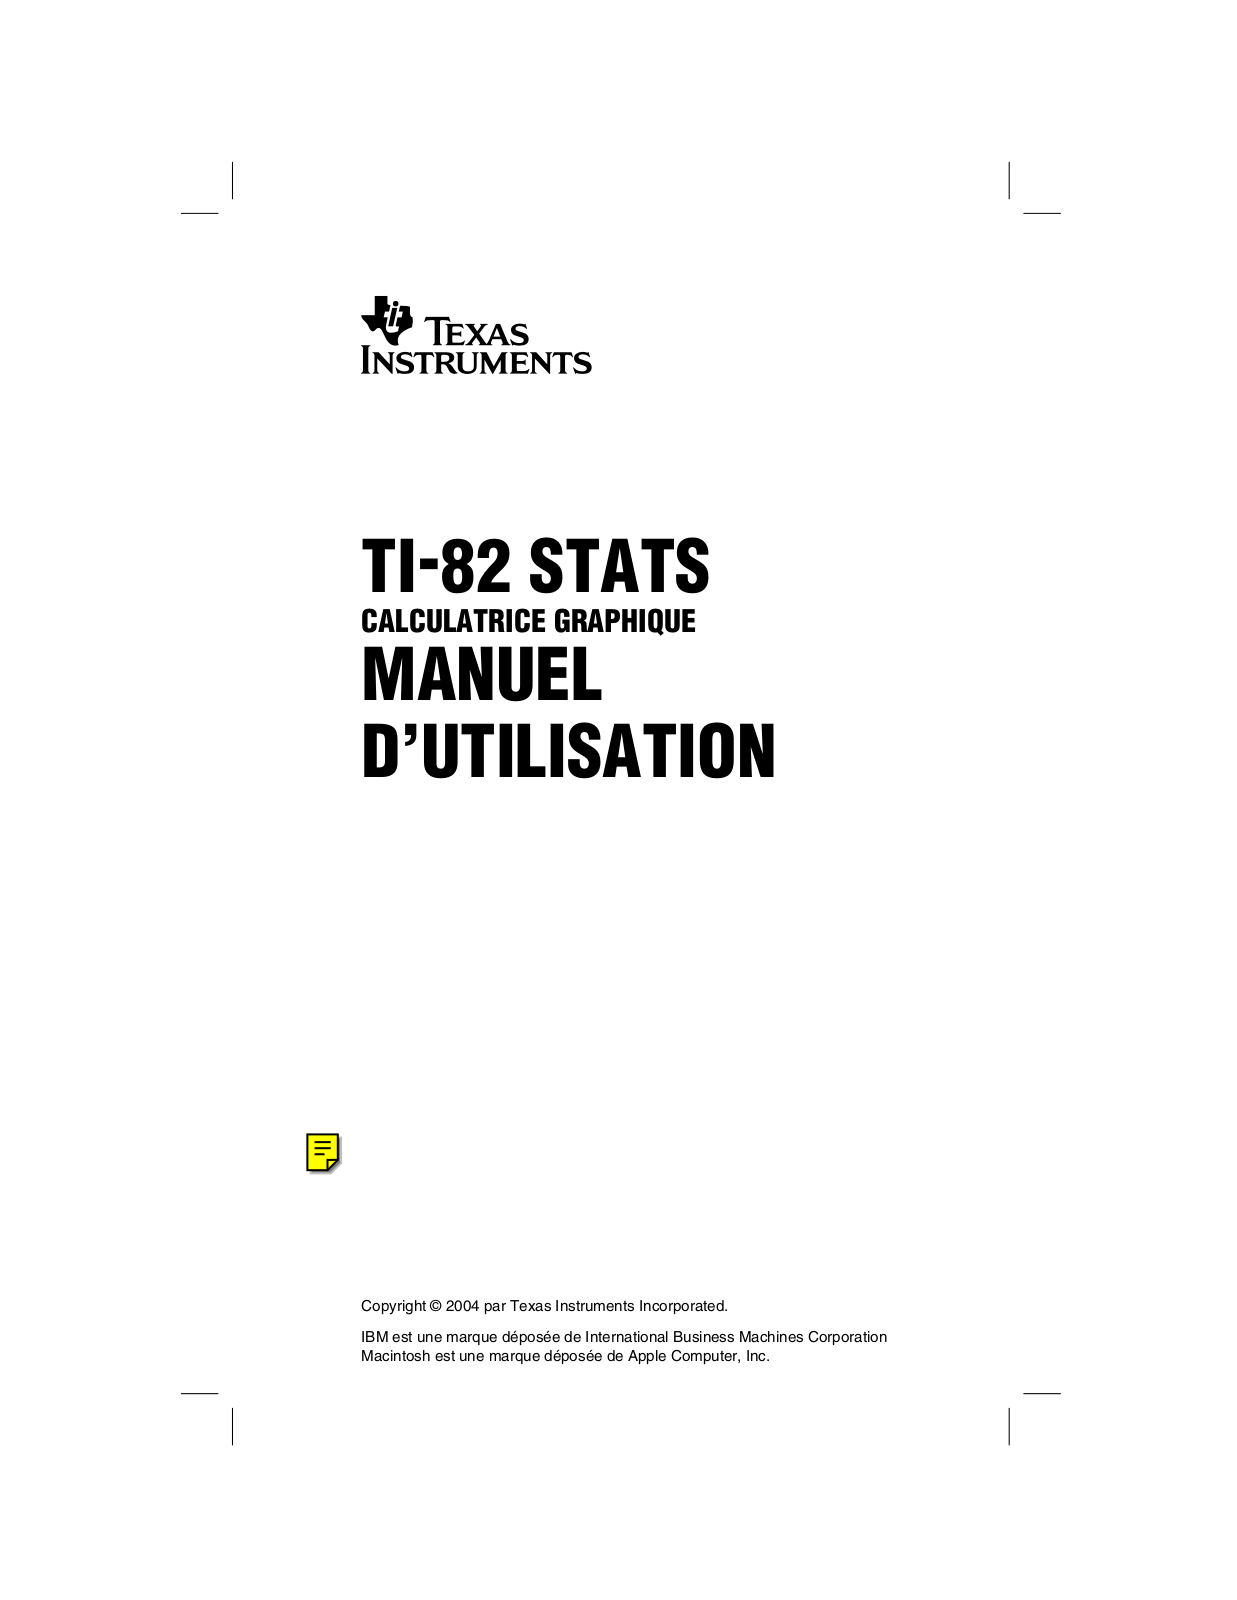 TEXAS INSTRUMENTS TI-82 User Manual